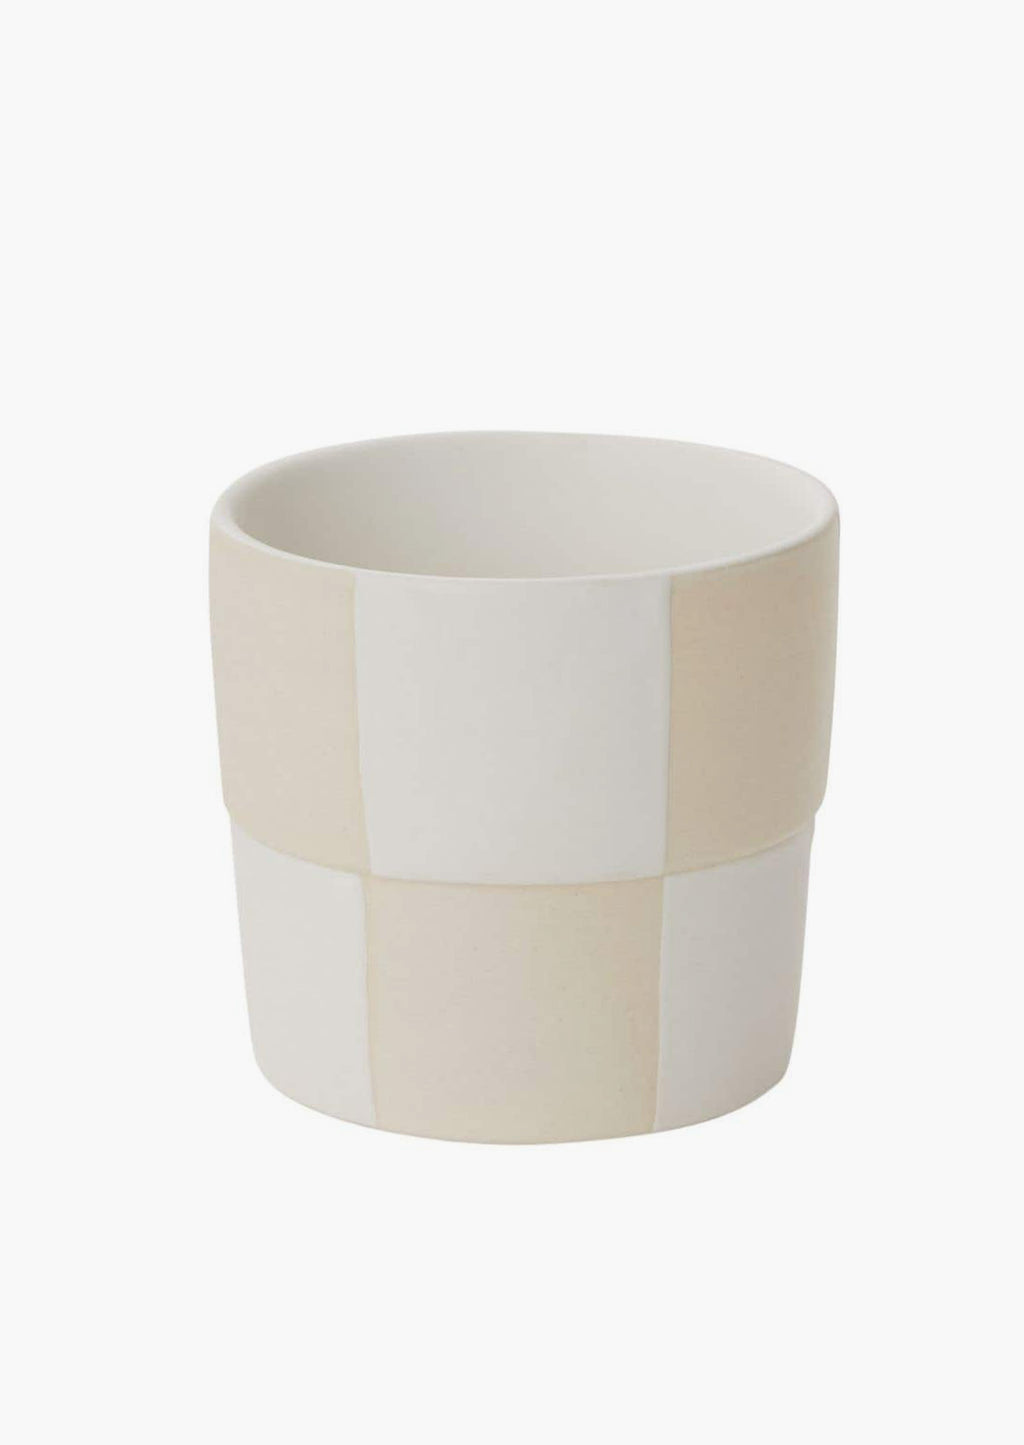 Small: A small cream and white checker patterned planter pot.